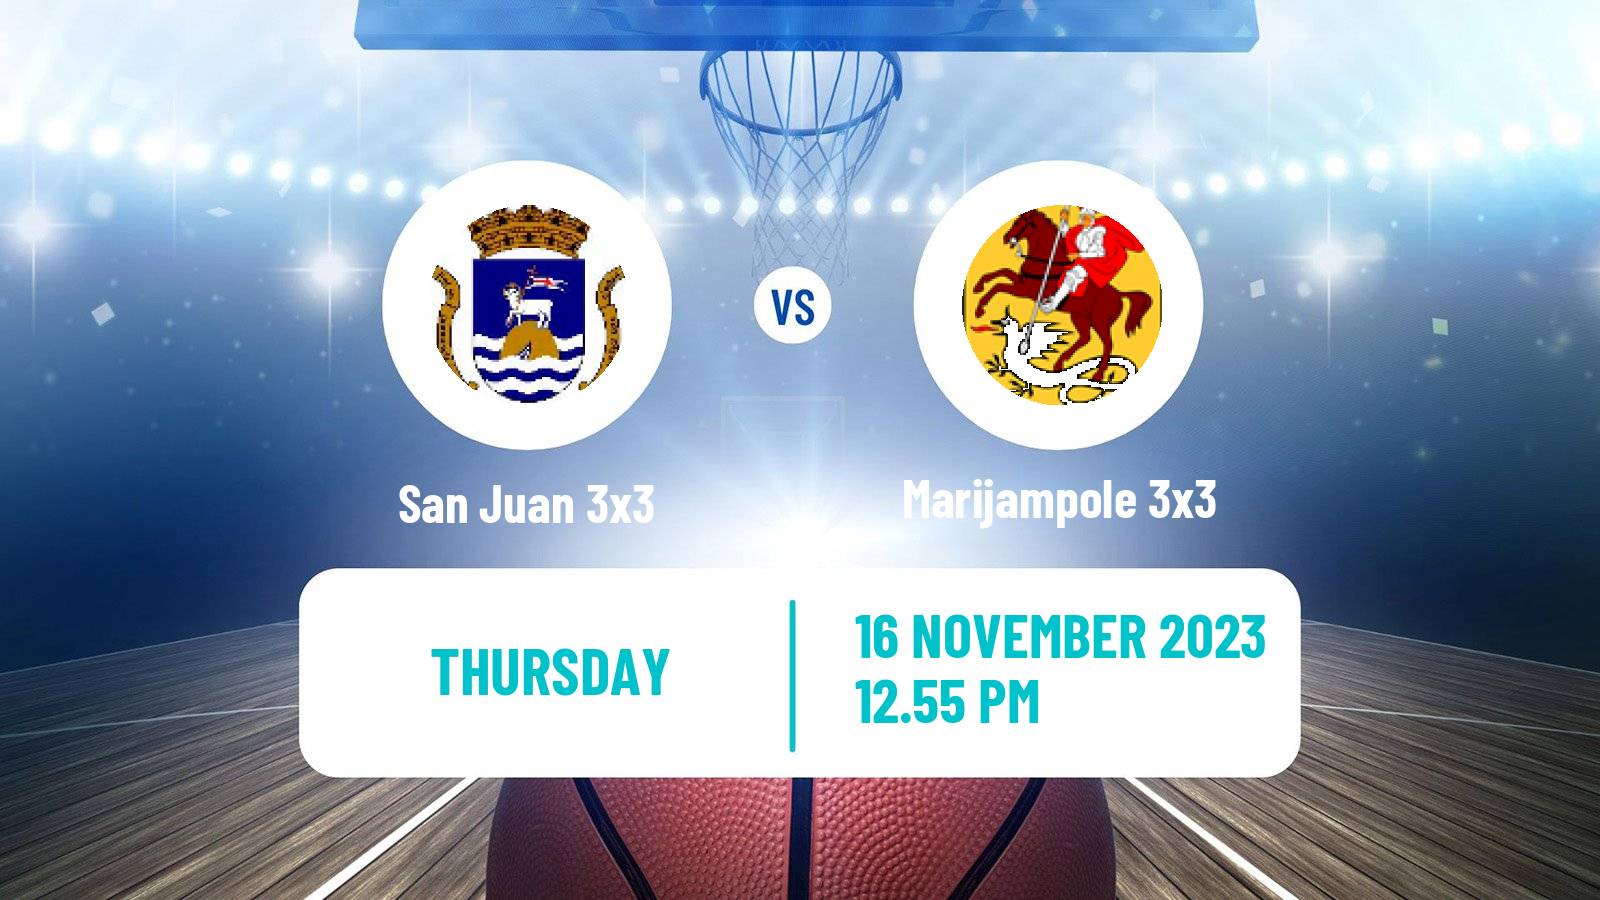 Basketball World Tour Manama 3x3 San Juan 3x3 - Marijampole 3x3